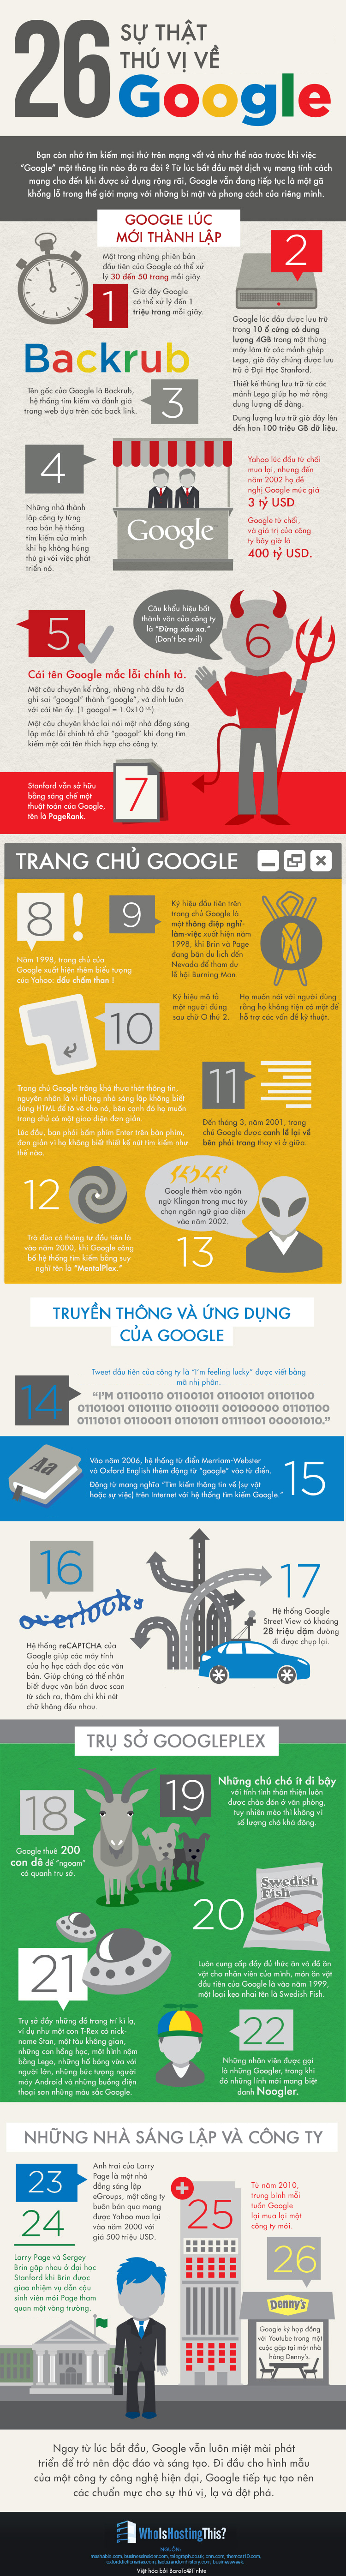 [Infographic] 26 su that thu vi ve google.